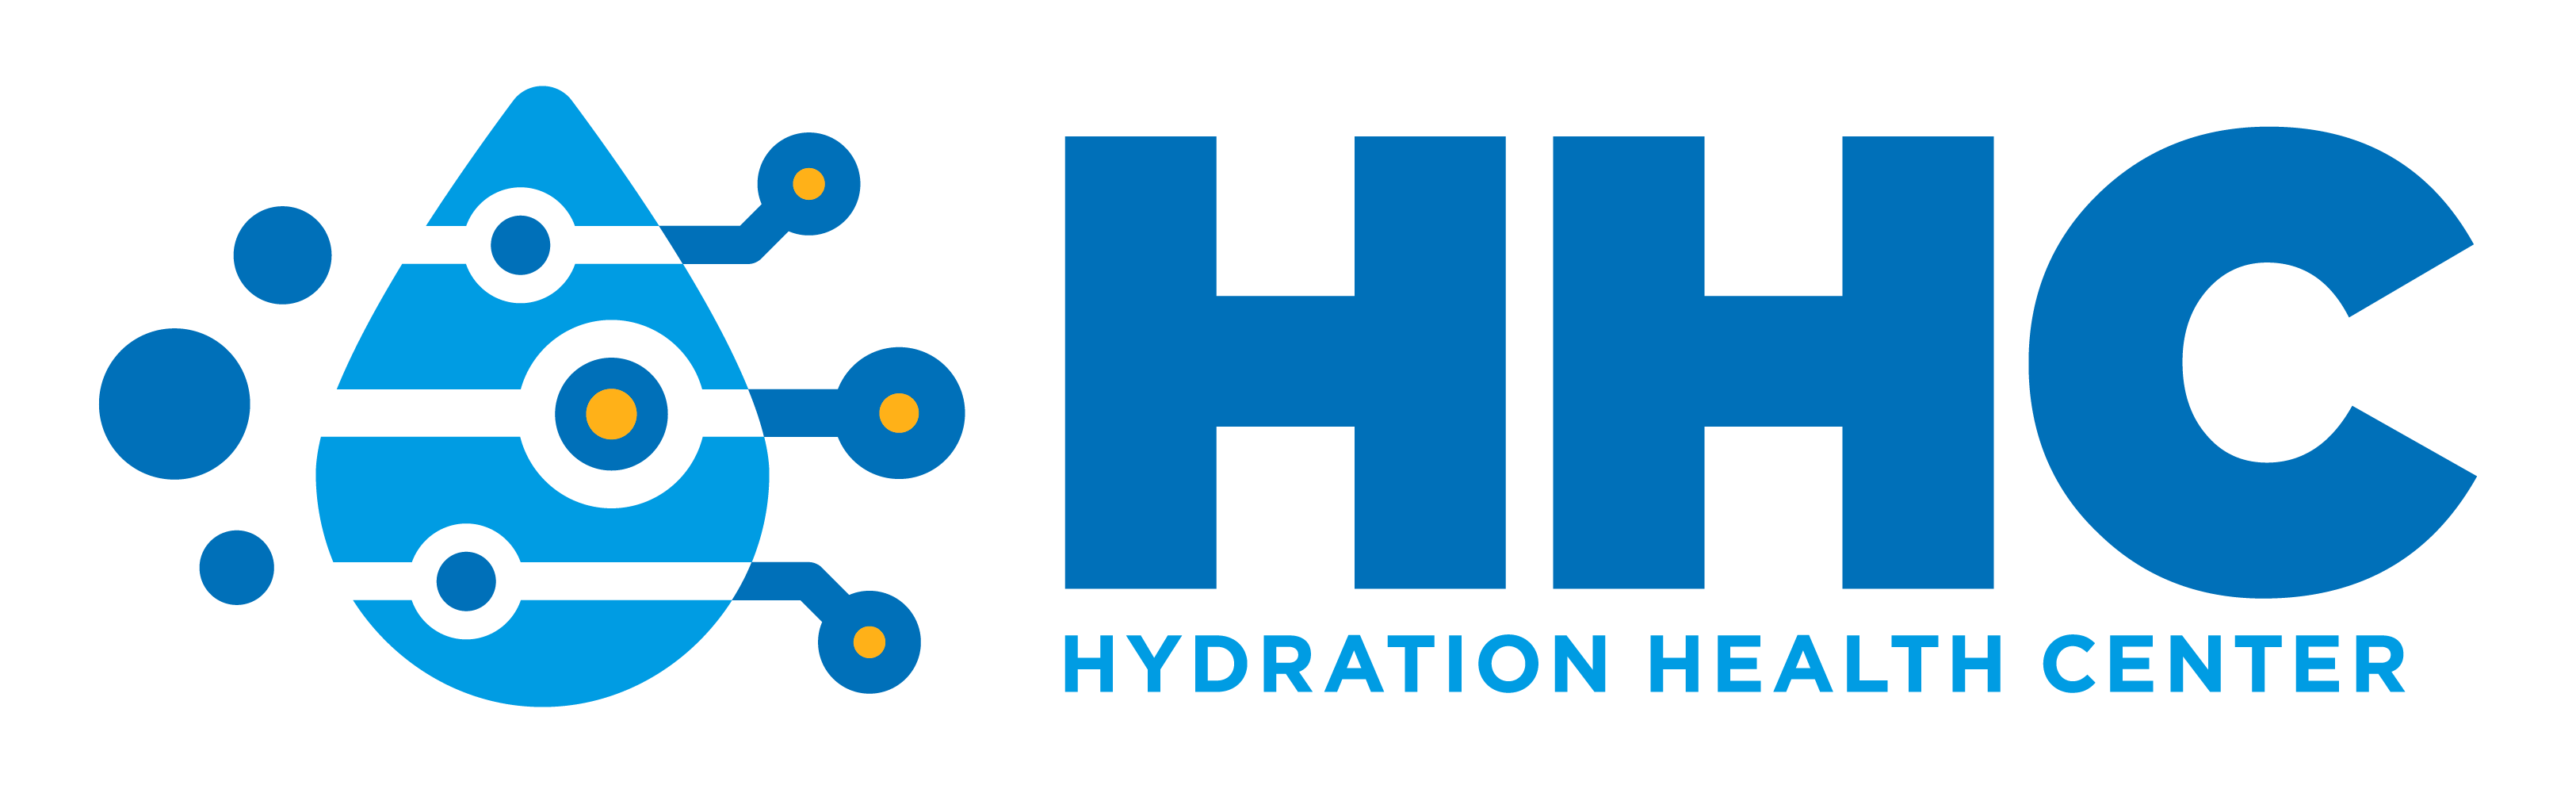 hydration health center logo